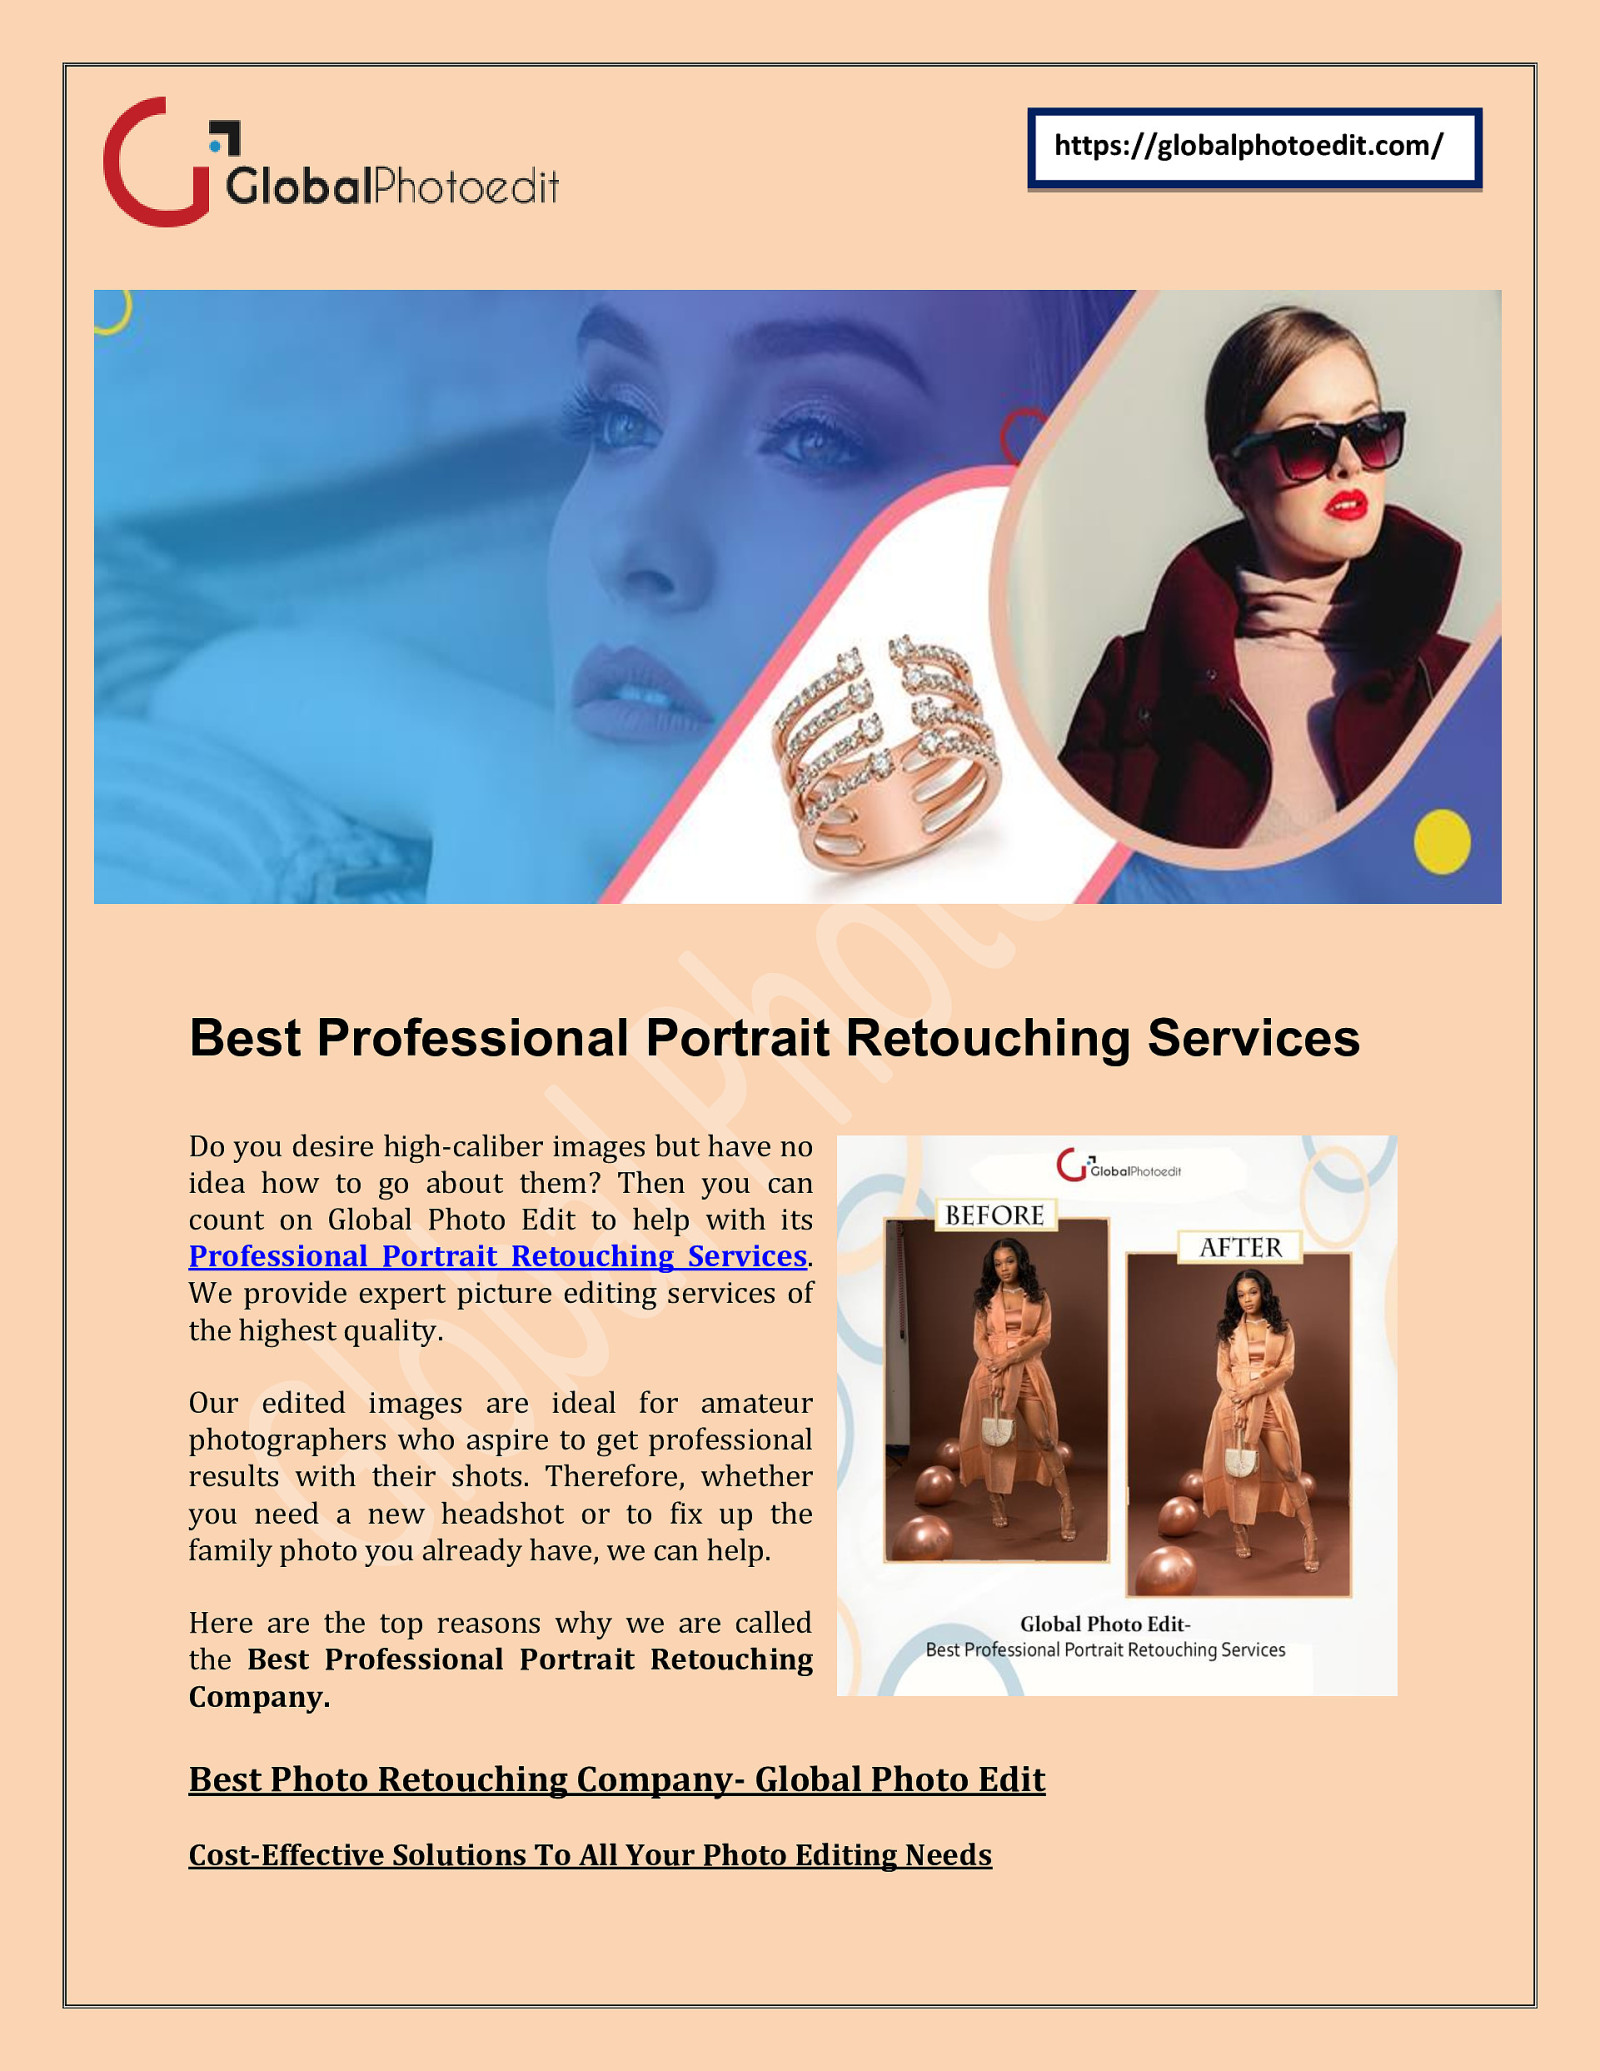 Professional Portrait Retouching Company – Global Photo Edit